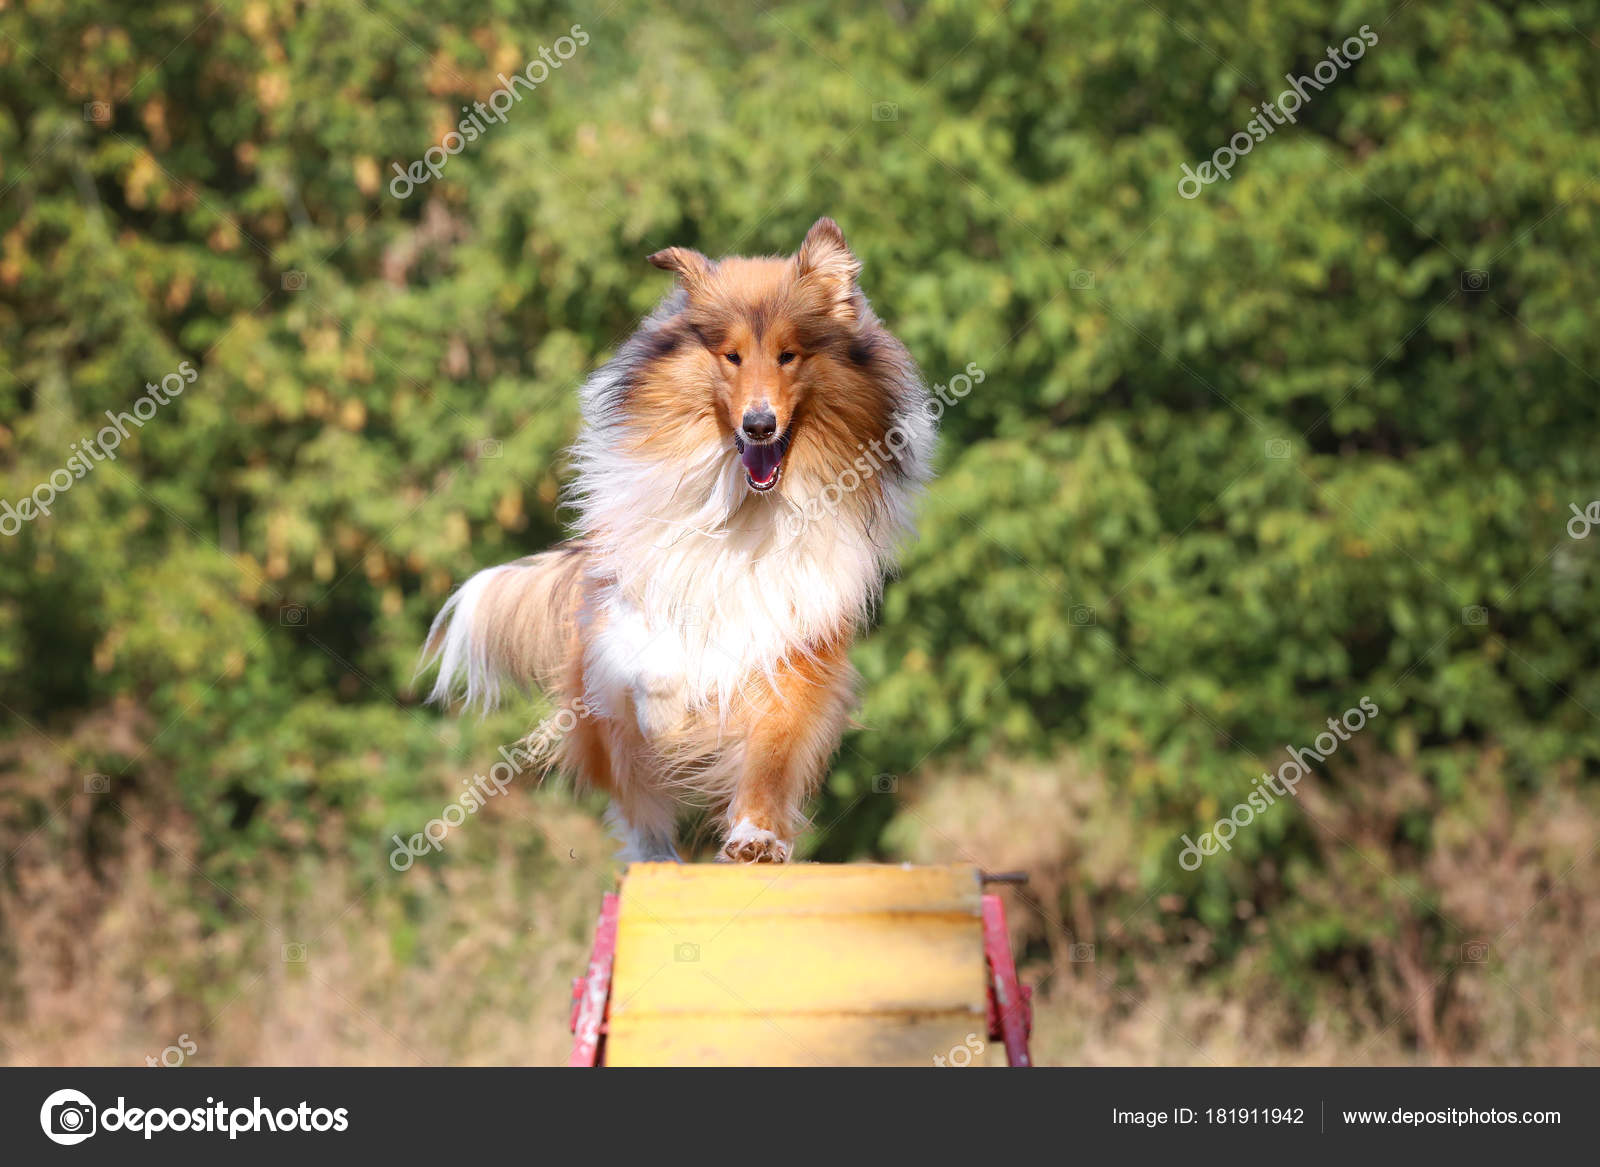 Dog Collie Breed Agility Dog Running Board Stock Photo C Ykoronovskiy 181911942